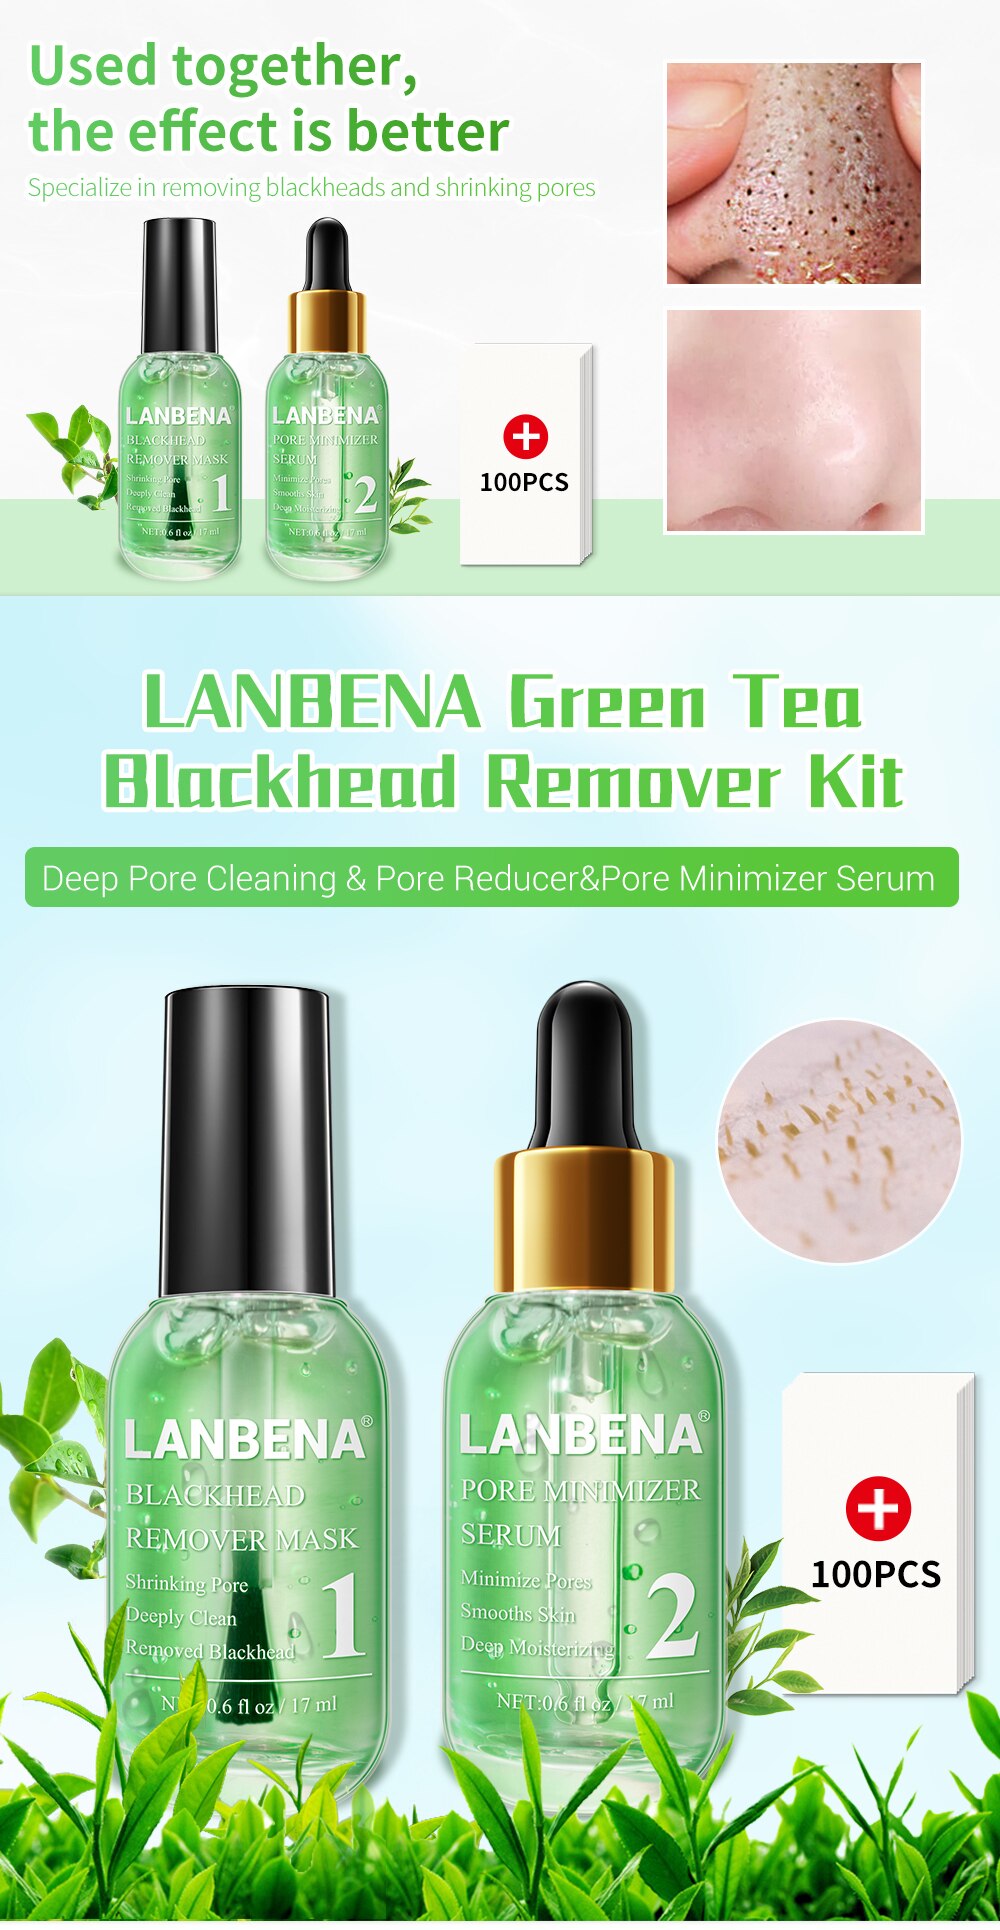 Lanbena Blackhead Remover Mask Face Black Mask Pore Treatment Serum Anti Acne Facial Peeling Masks Cleansing Skin Care Beauty